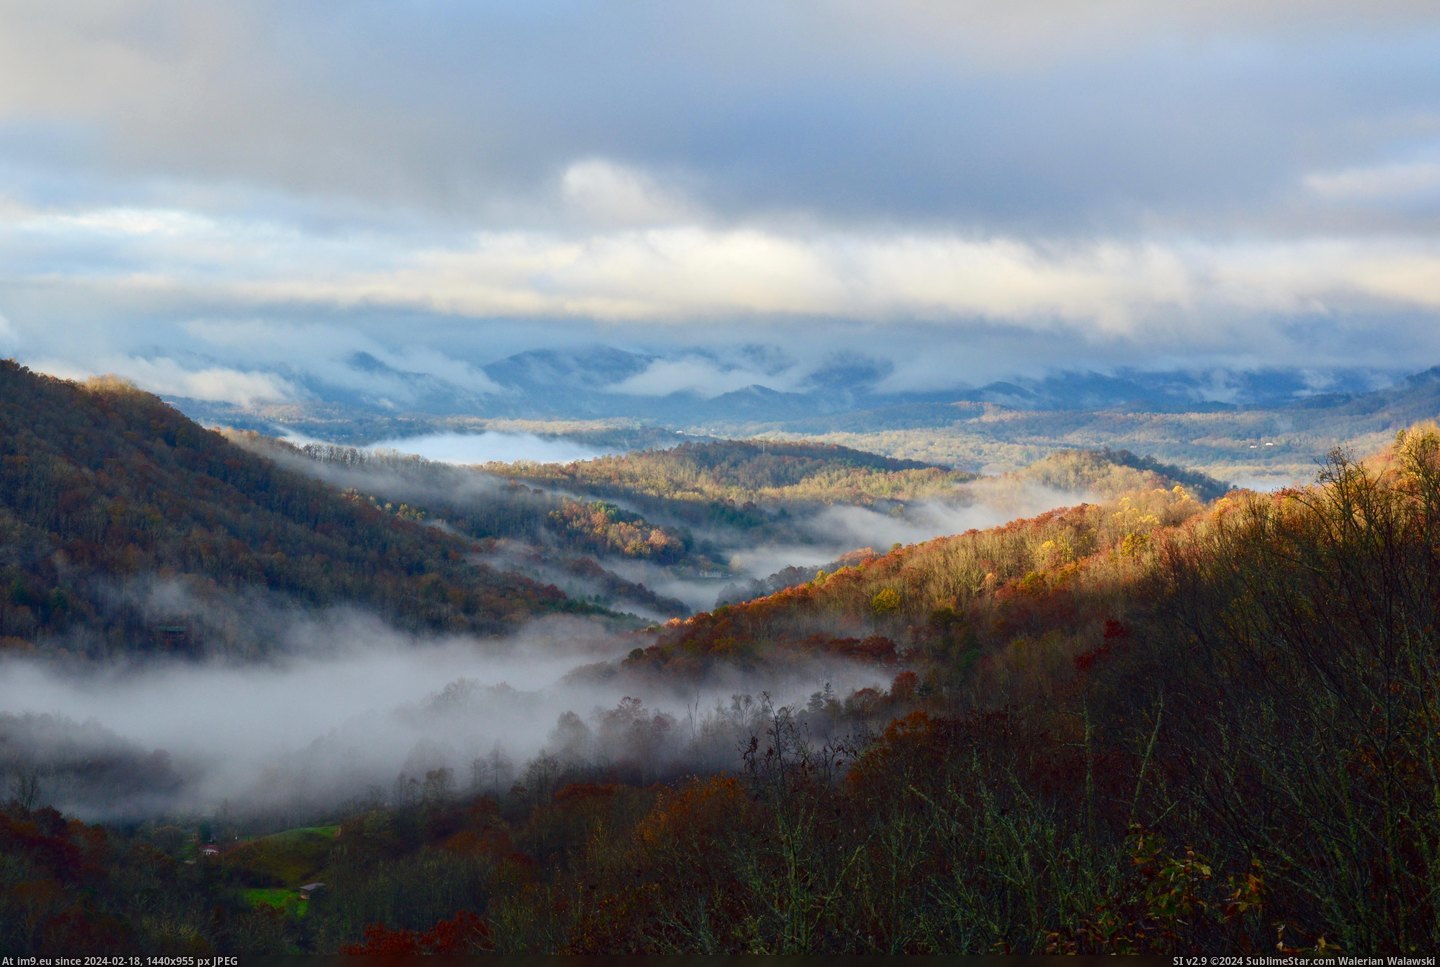 #Photo #Great #North #Carolina #November #Smoky #Mountains #Usa #Rain [Earthporn] Great Smoky Mountains, North Carolina USA. This photo was taken from my home in November of 2015. A rain had just pa Pic. (Изображение из альбом My r/EARTHPORN favs))